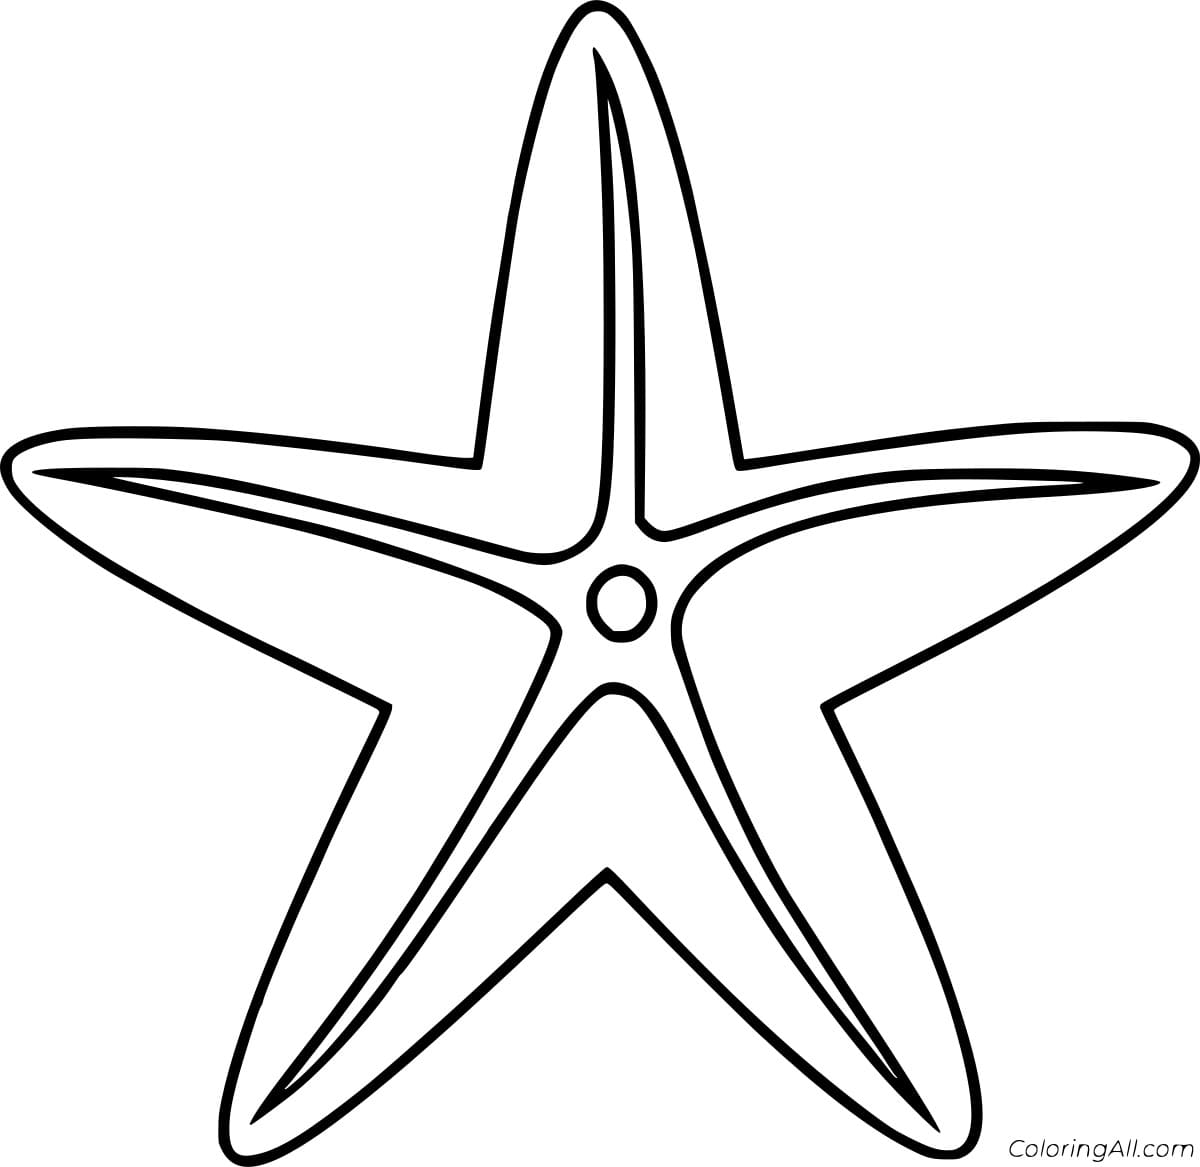 Simple Starfish Image